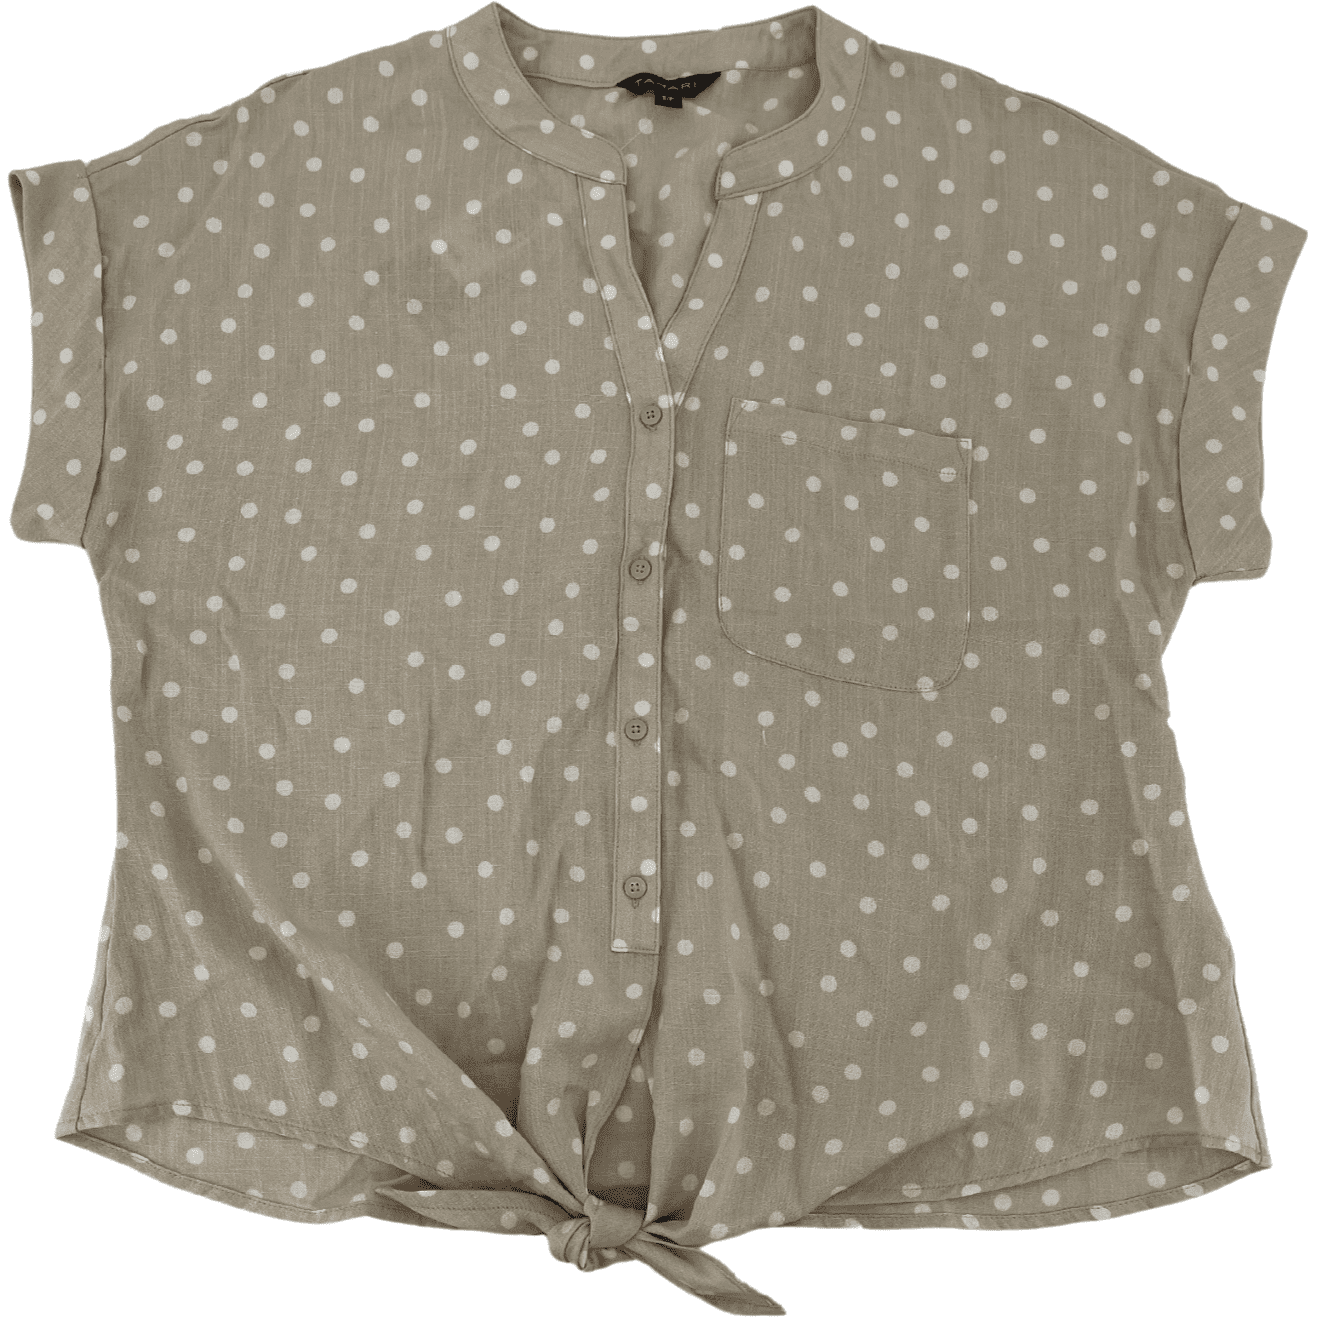 Tahari Women's Short Sleeve Top / Button Up Shirt / Tan with Polka Dots / Size Small